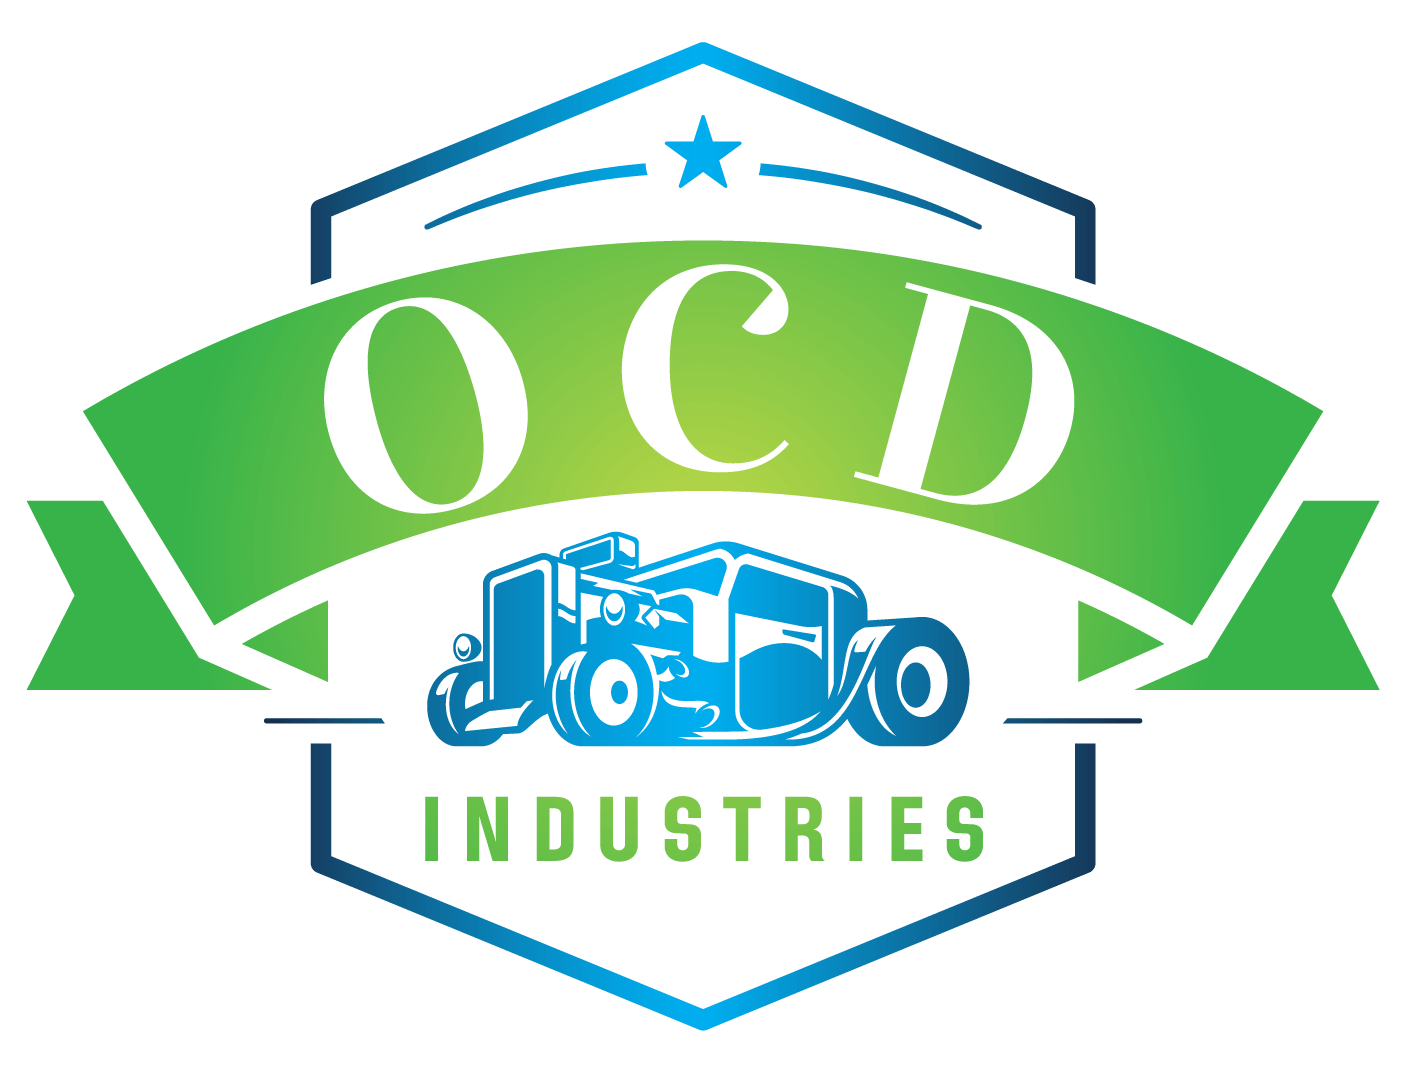 OCD Industries